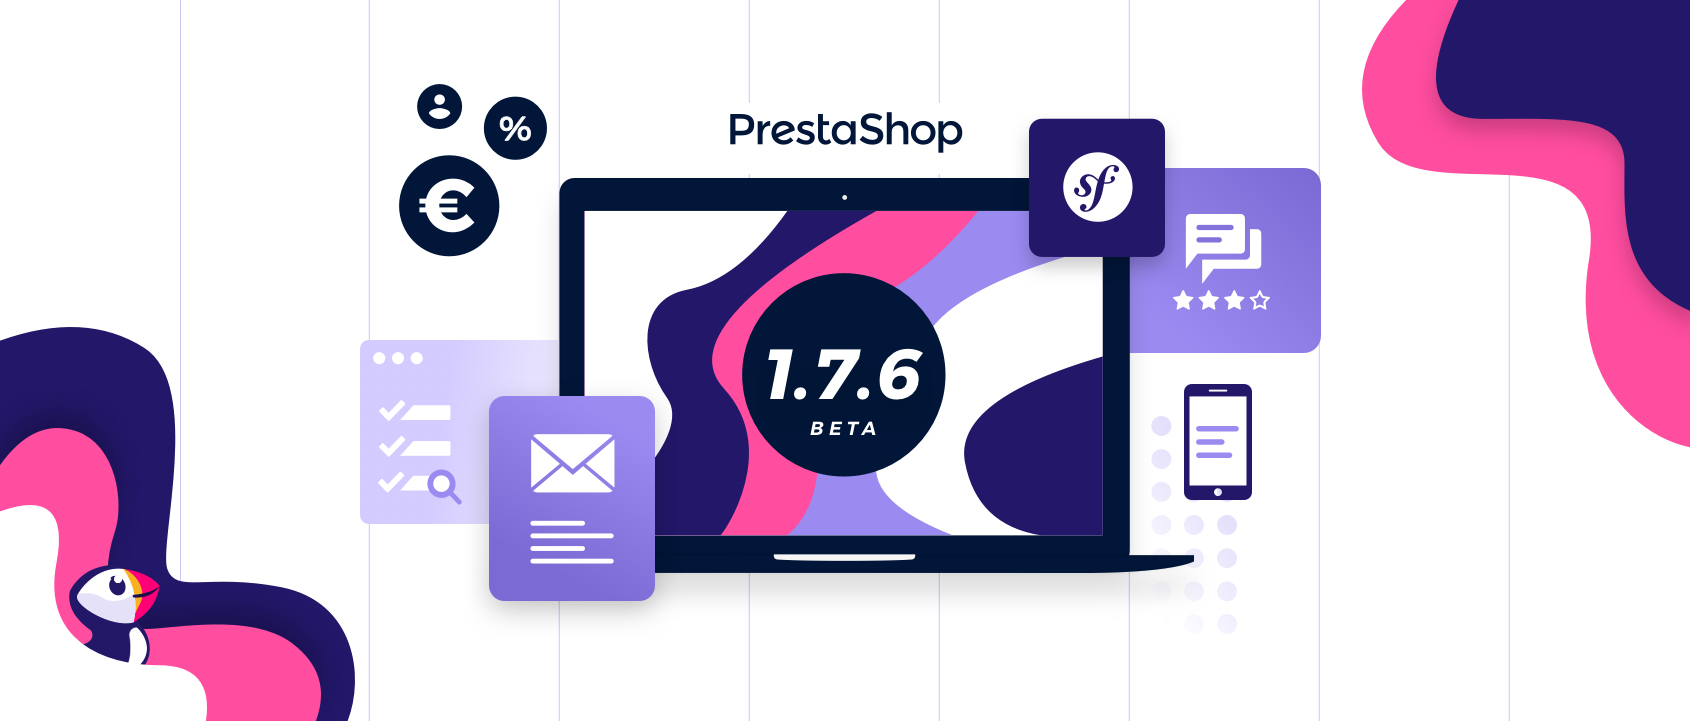 Prestashop 1.7.6.0 BETA Release